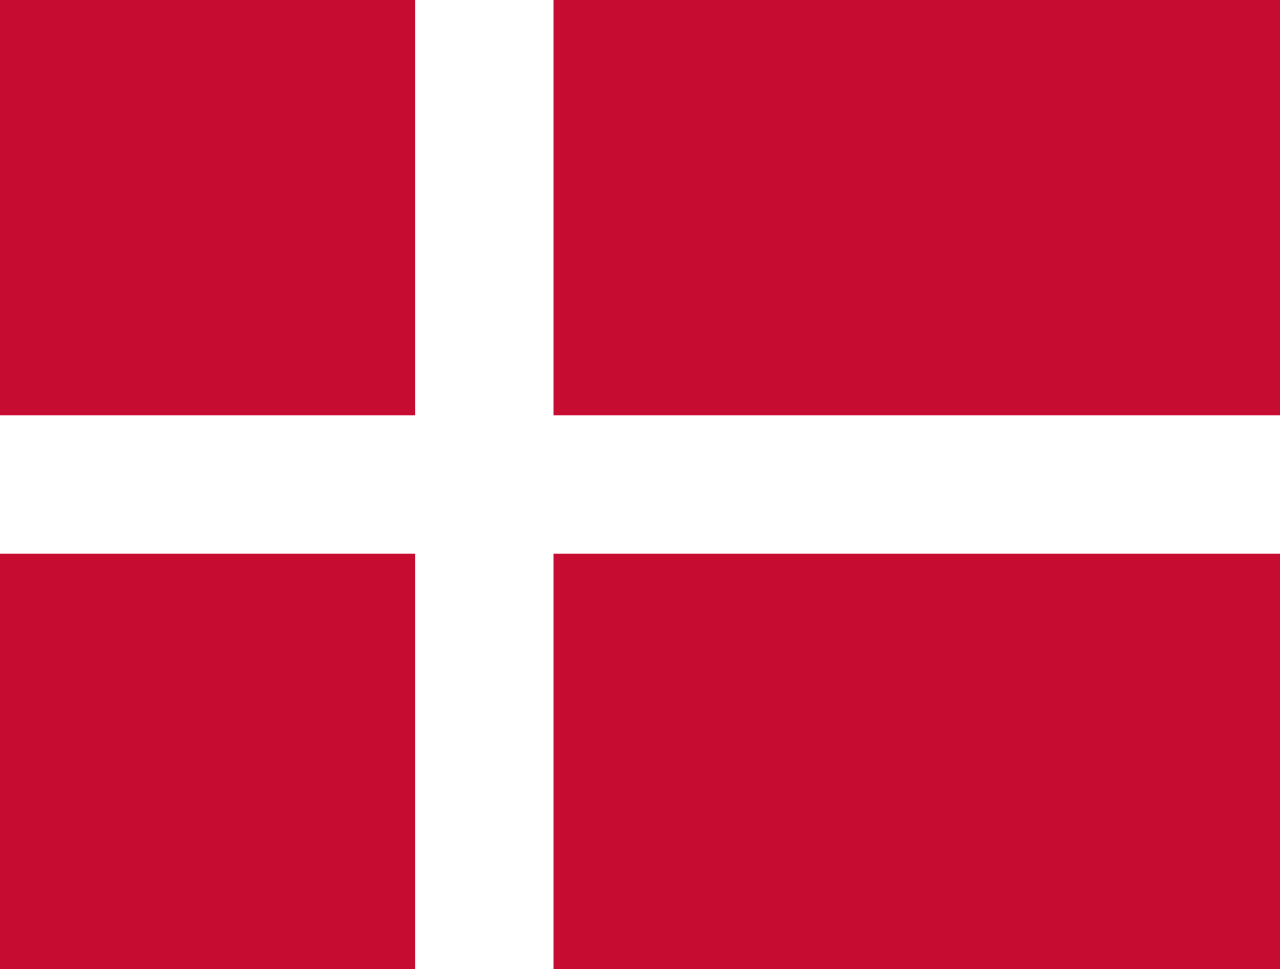 Poor marks in Denmark?